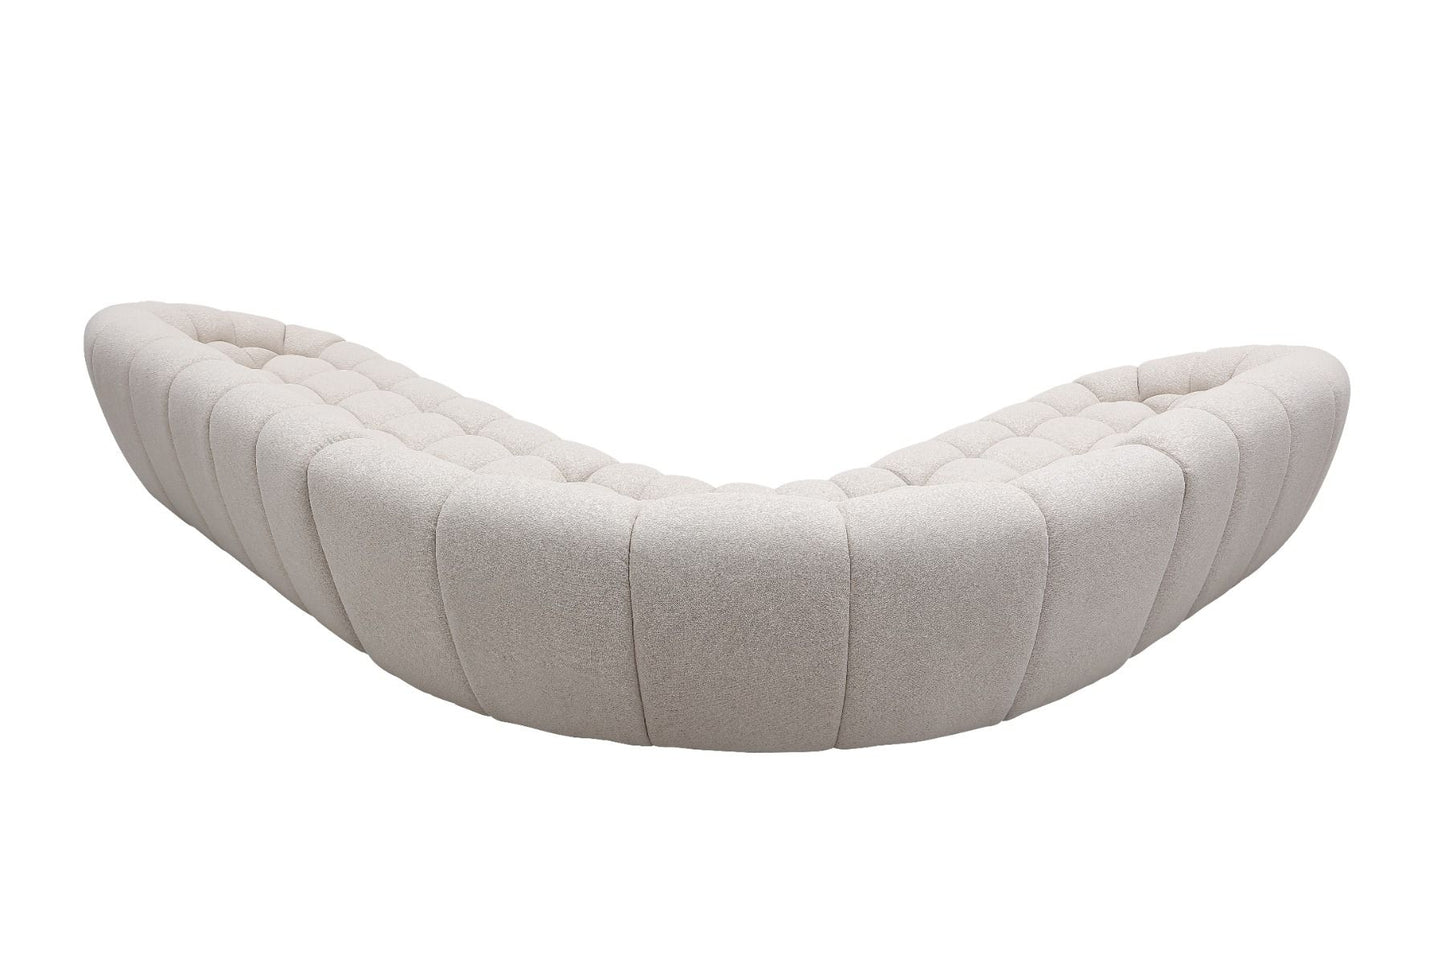 Divani Casa Yolonda - Modern Beige Curved Sectional Sofa